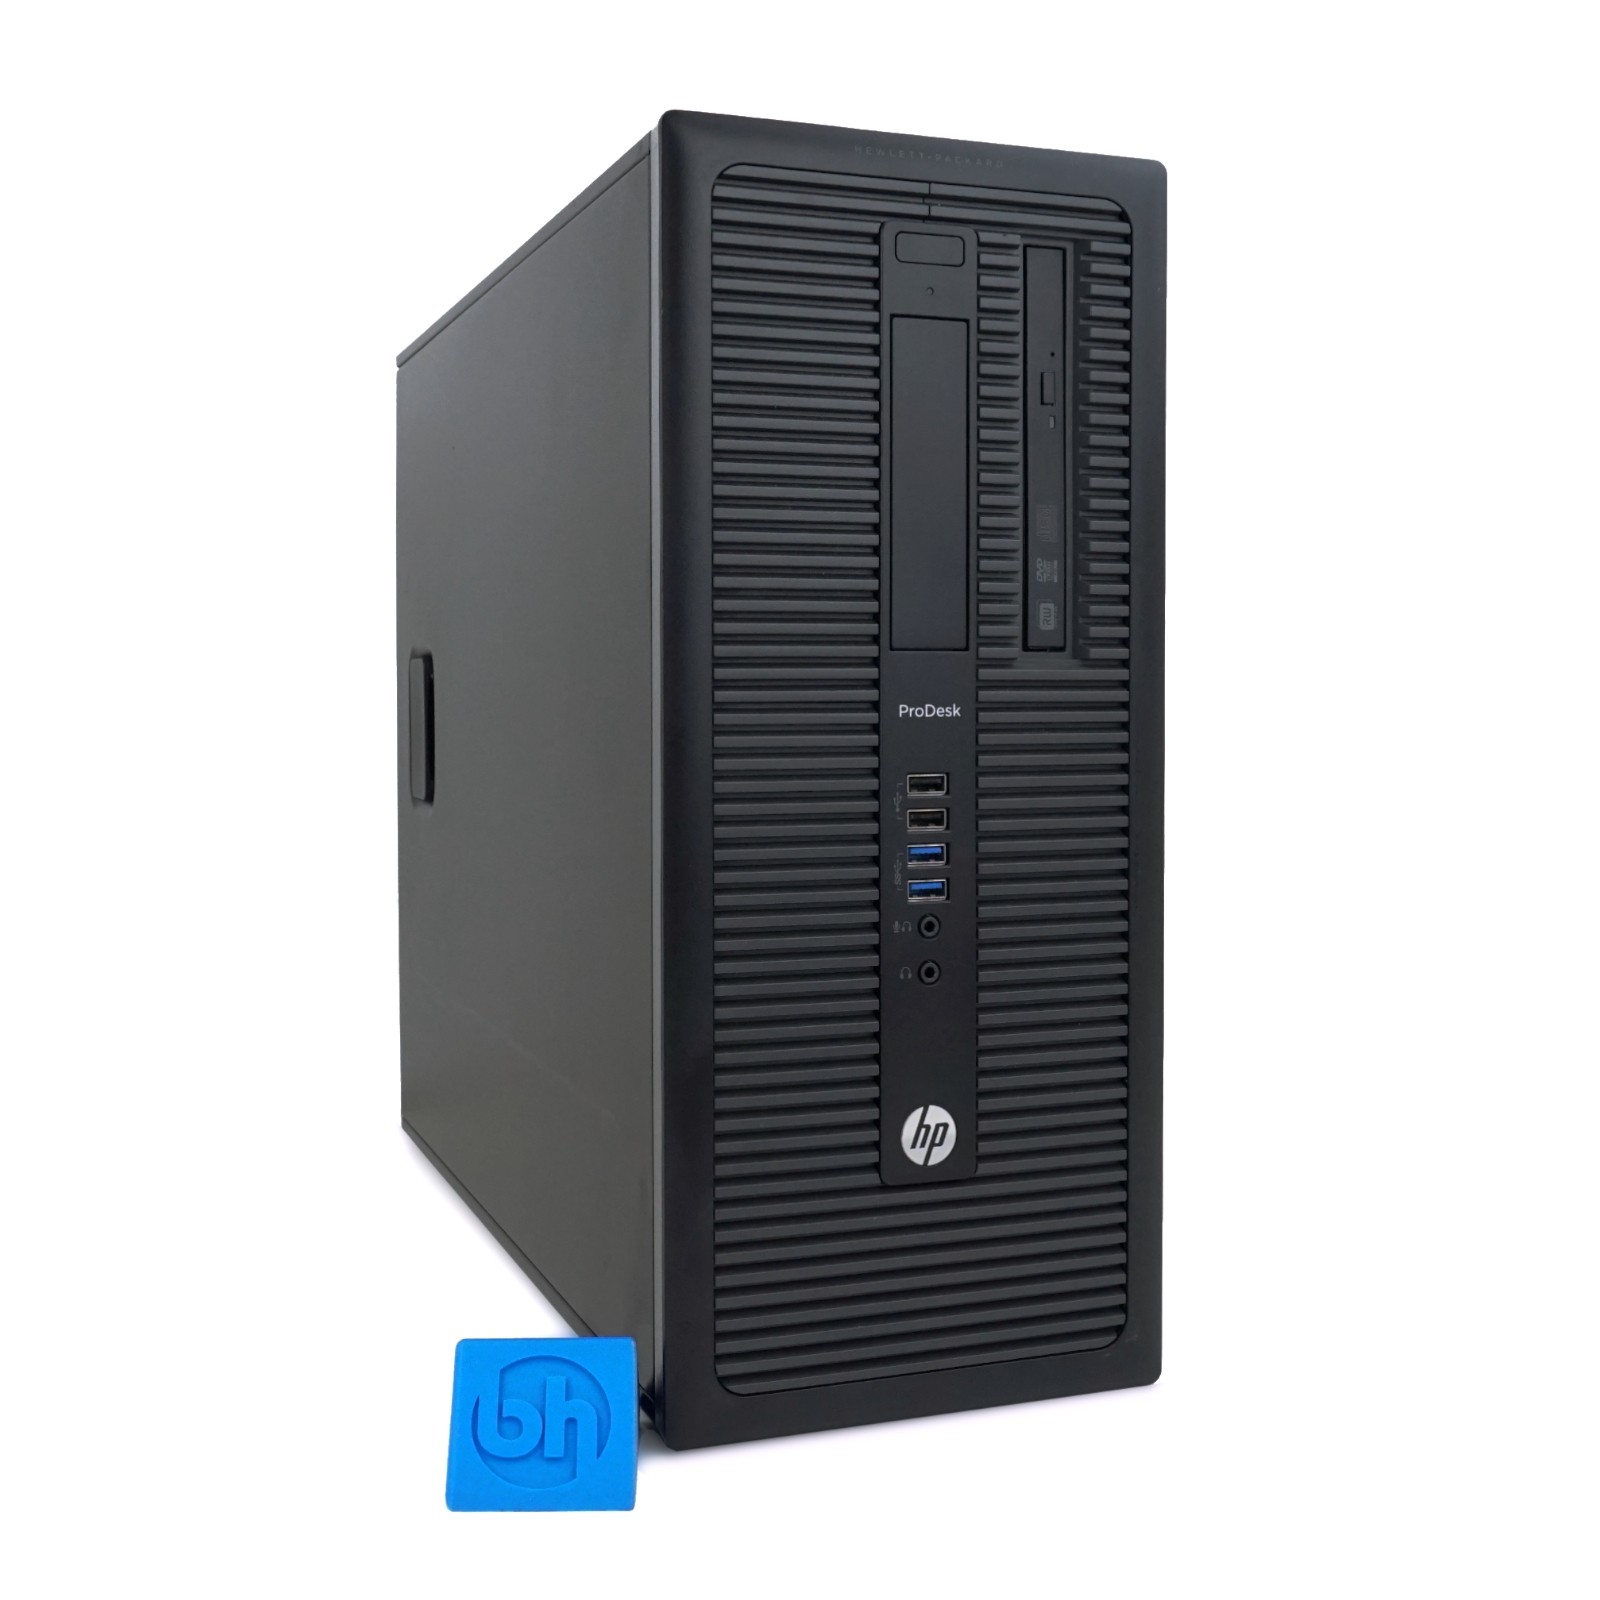 HP ProDesk 600 G1 Tower Desktop PC Front Angle Left